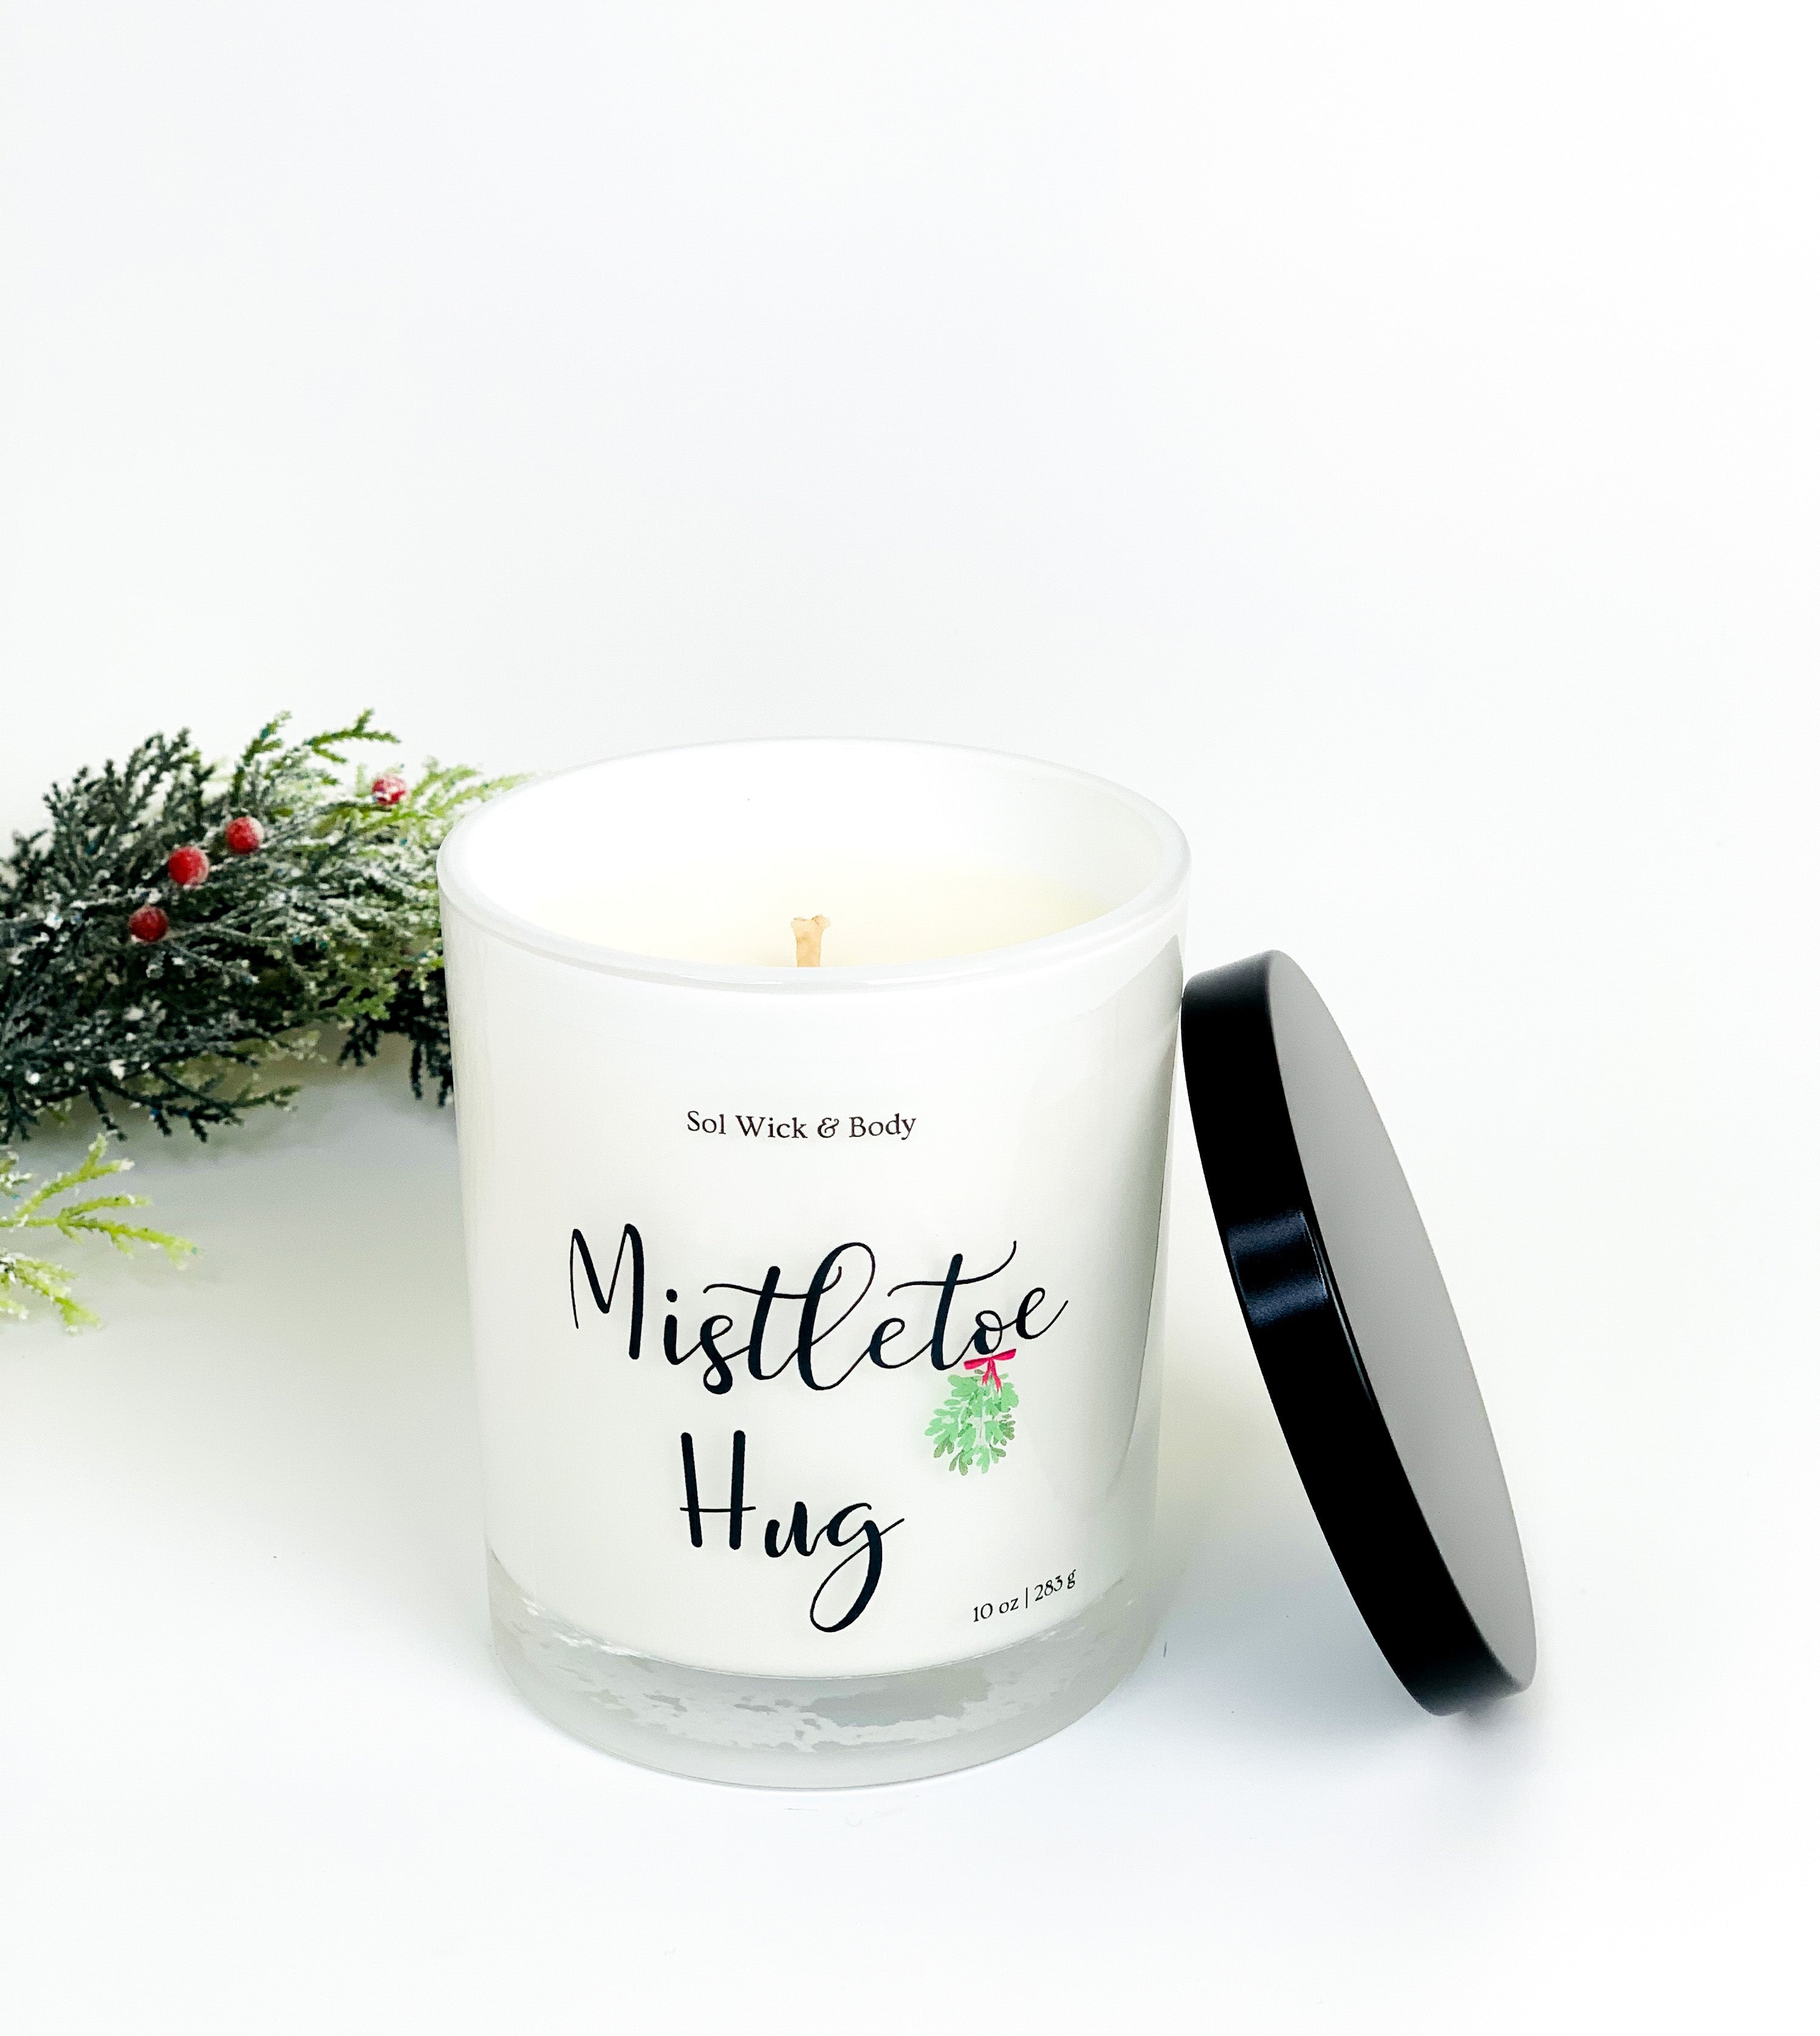 Mistletoe Hug Candle Balsam pine scented